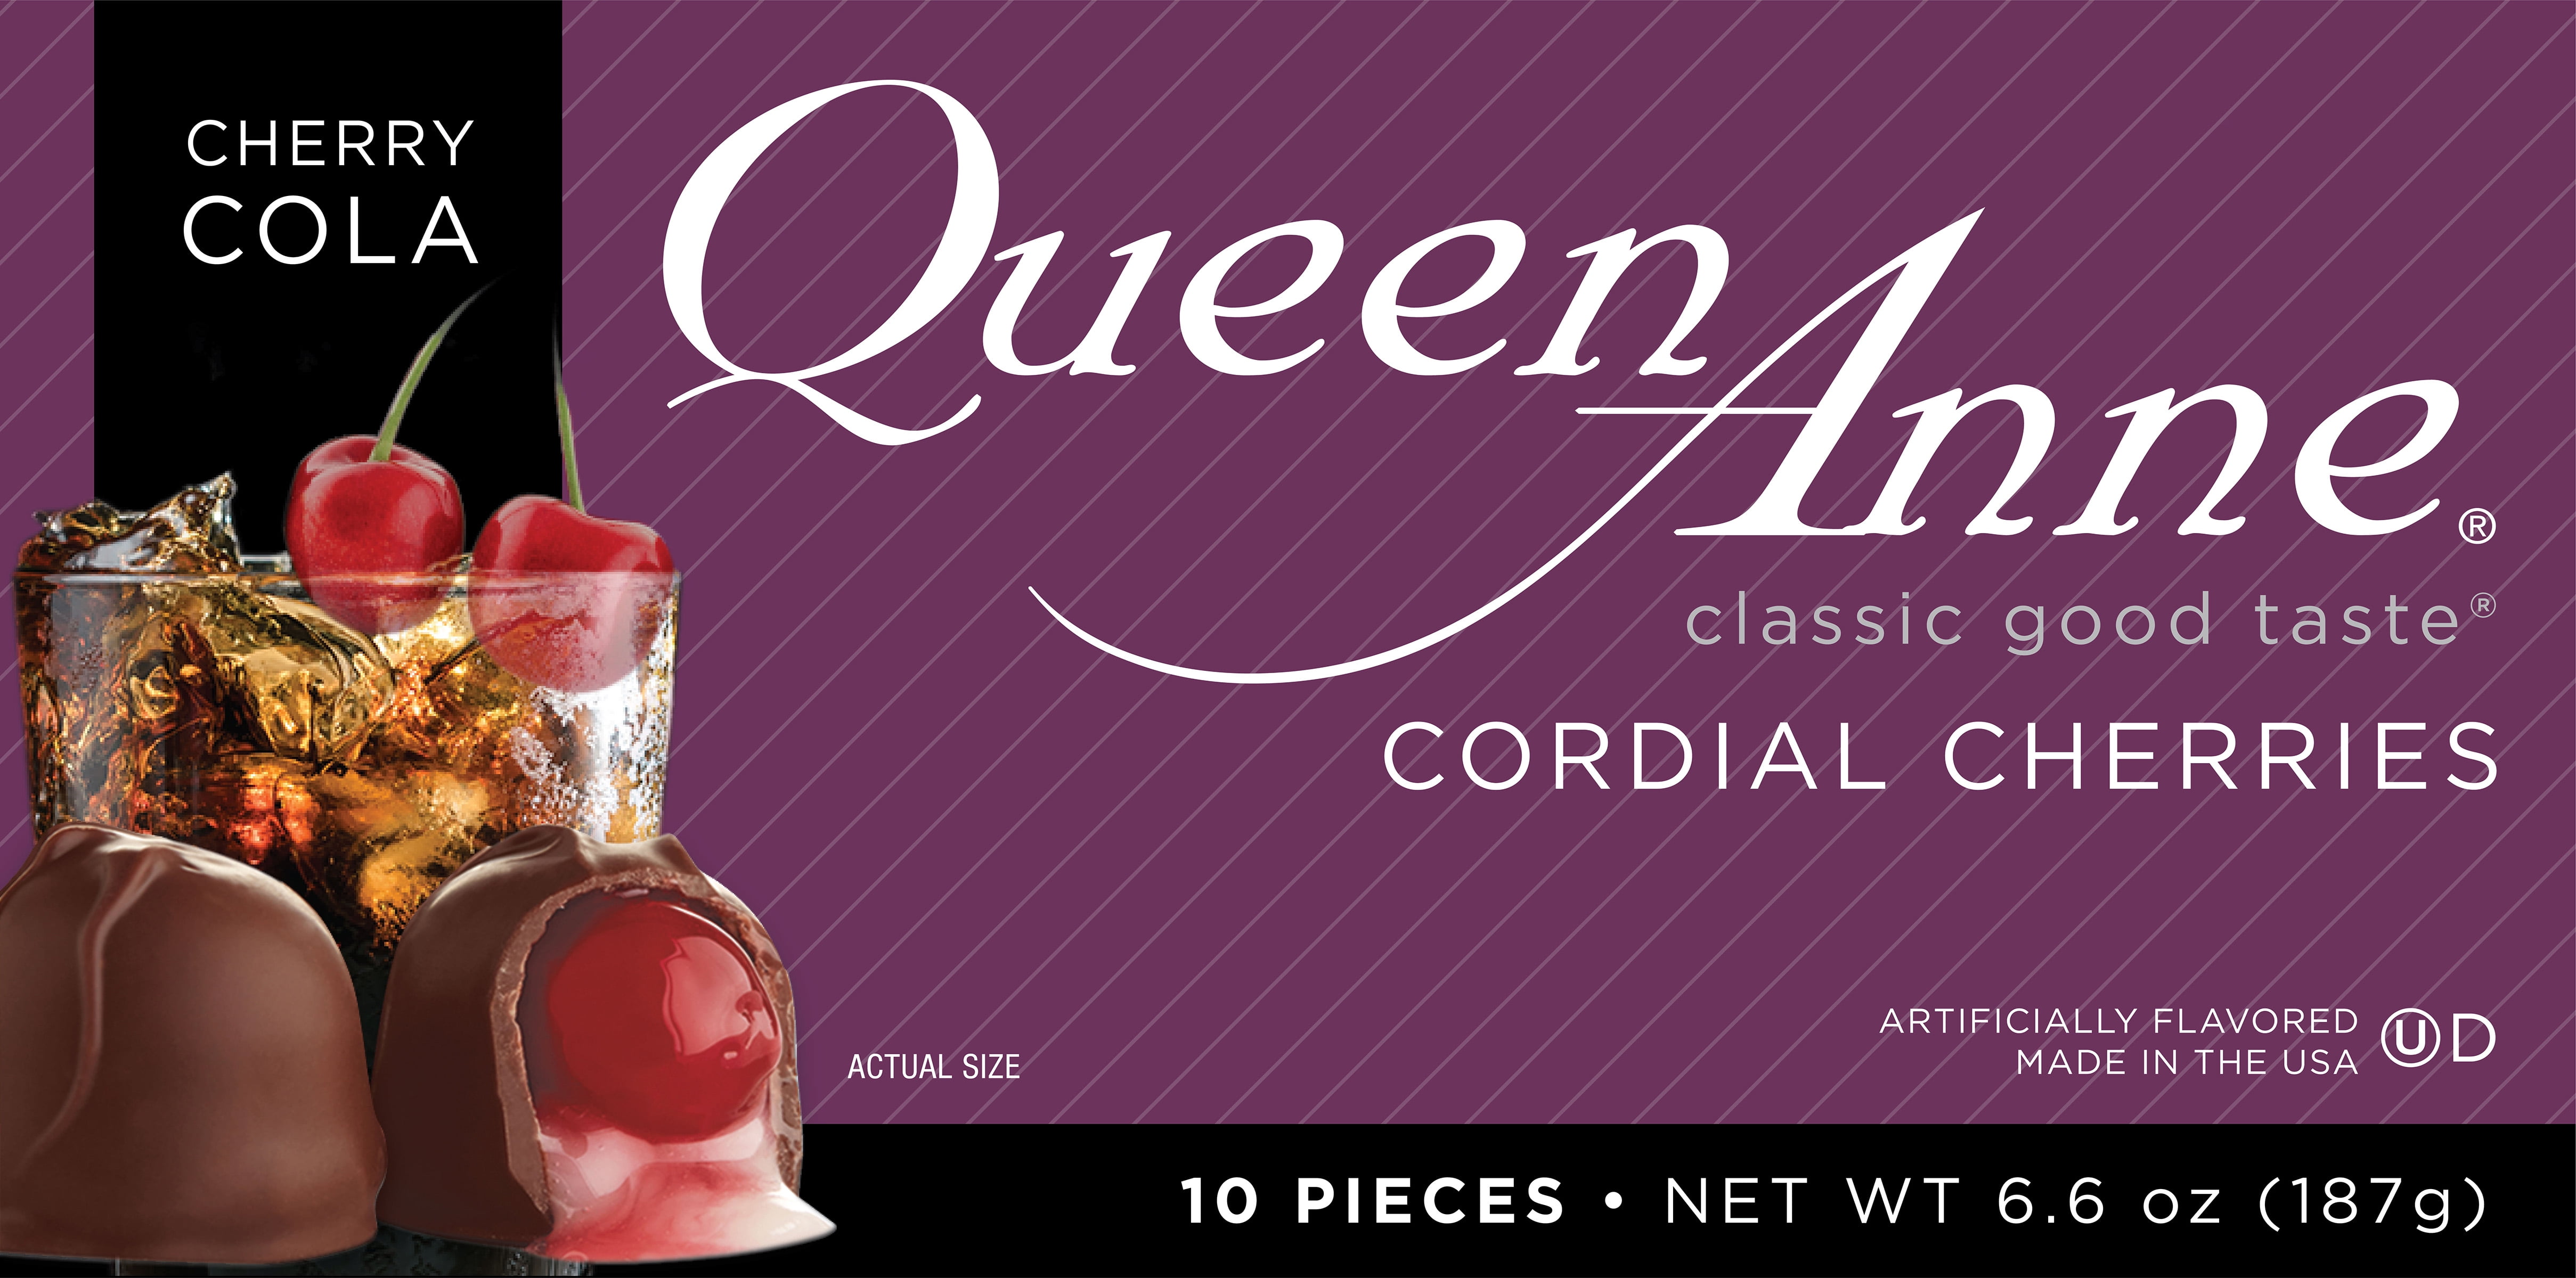 Queen Anne Cherry Cola Cordial Cherries, 6.6 oz Box, 10 Pieces